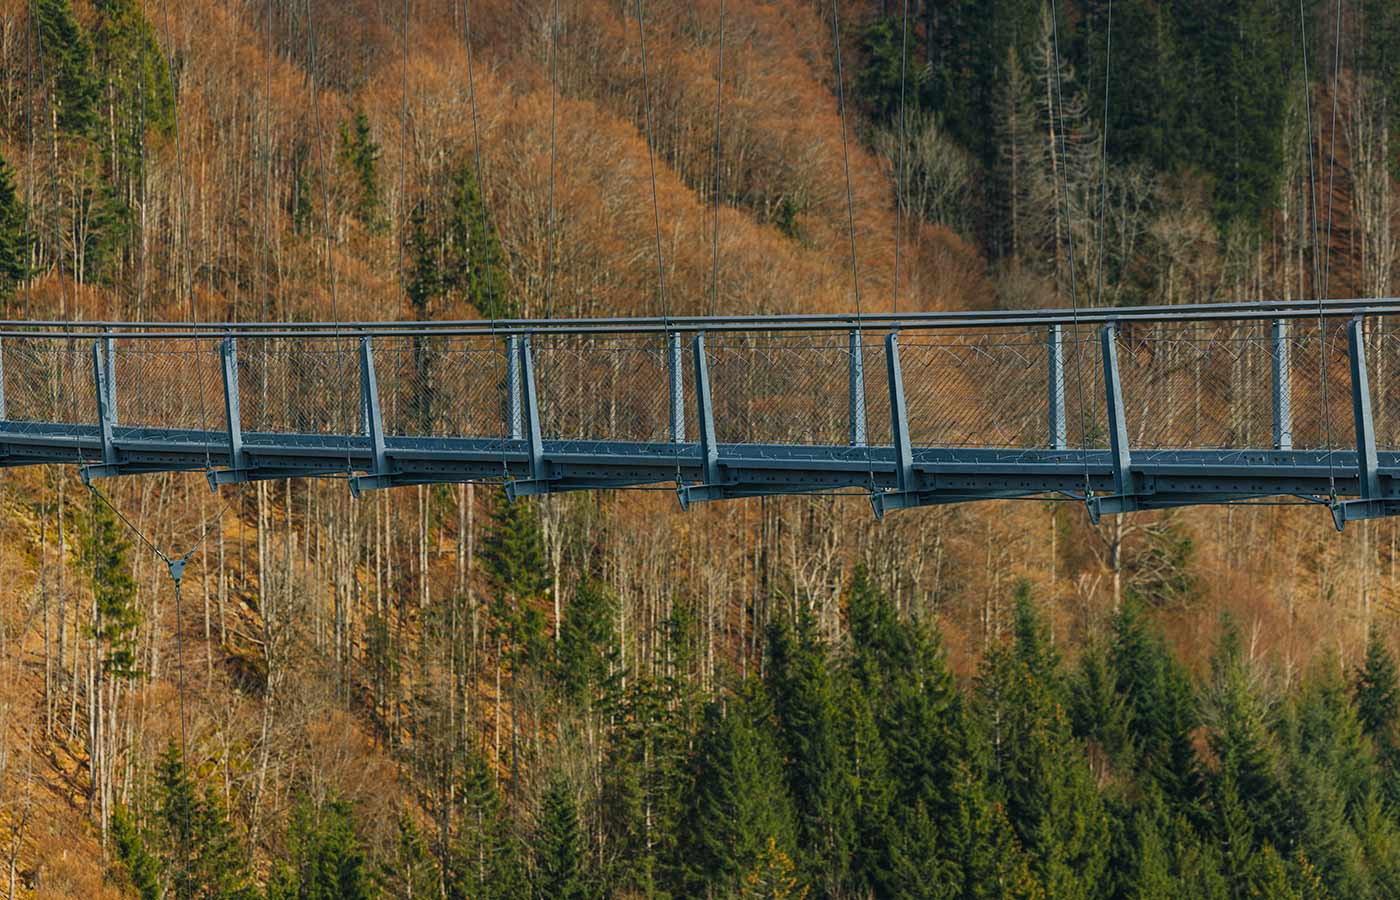 Photograph of the BLACKFORESTLINE suspension bridge in autumn